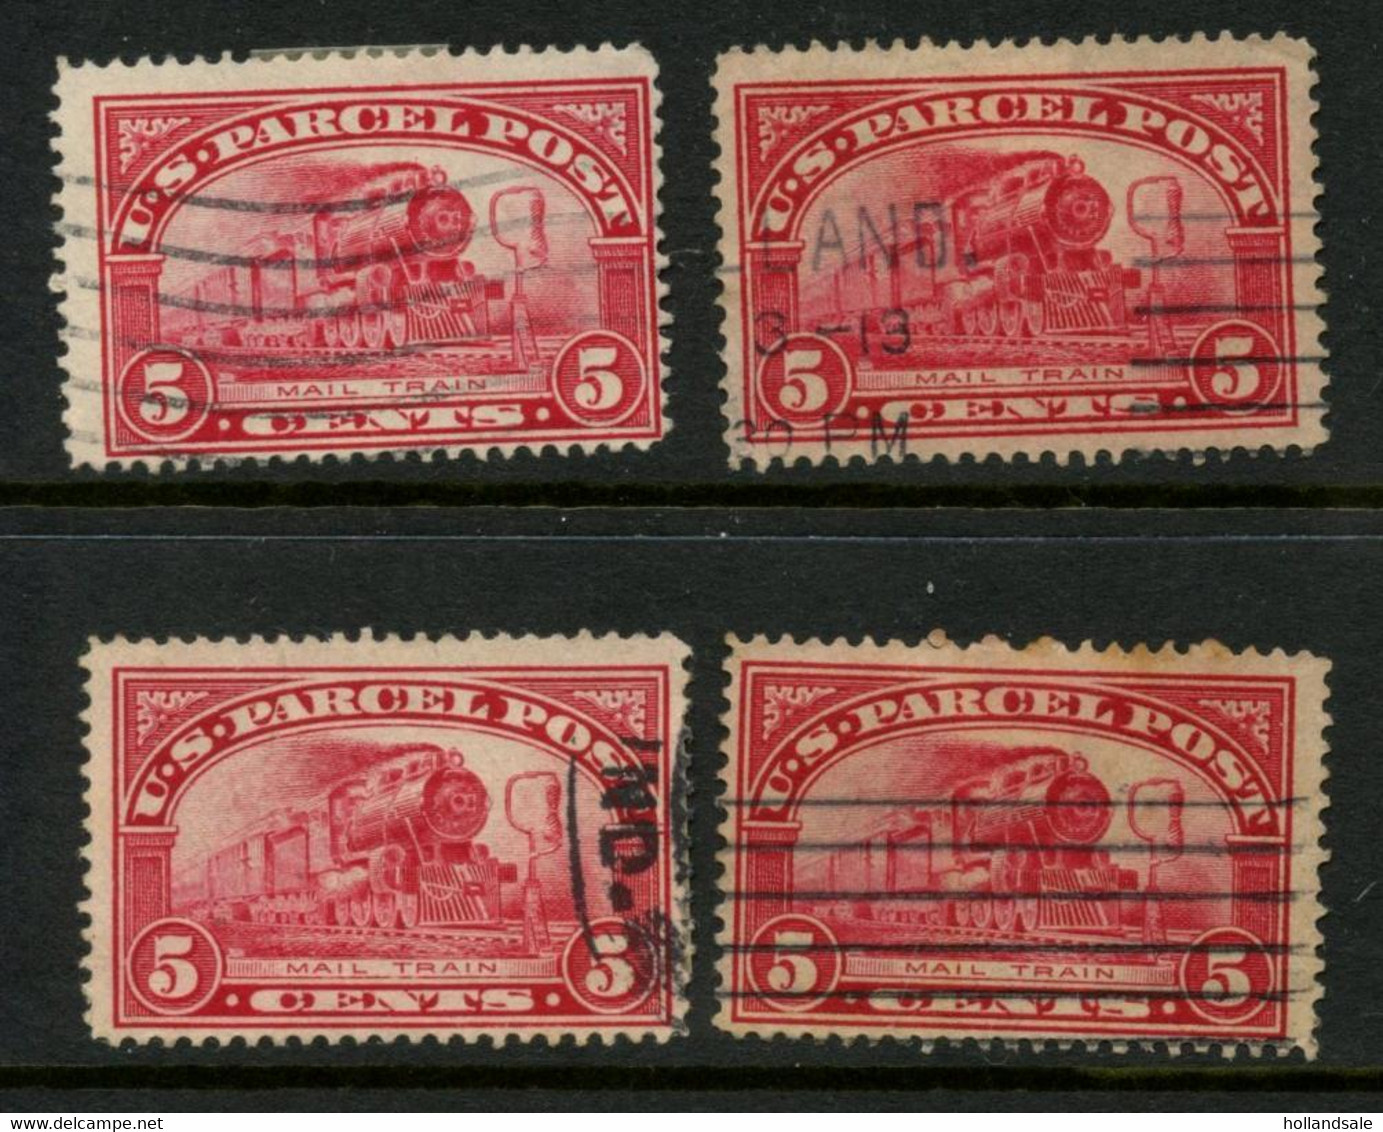 U.S.A. - 1913  5c Parcel Post Stamps. Five (5) Stamps. Used. SCOTT # PP5. - Paketmarken